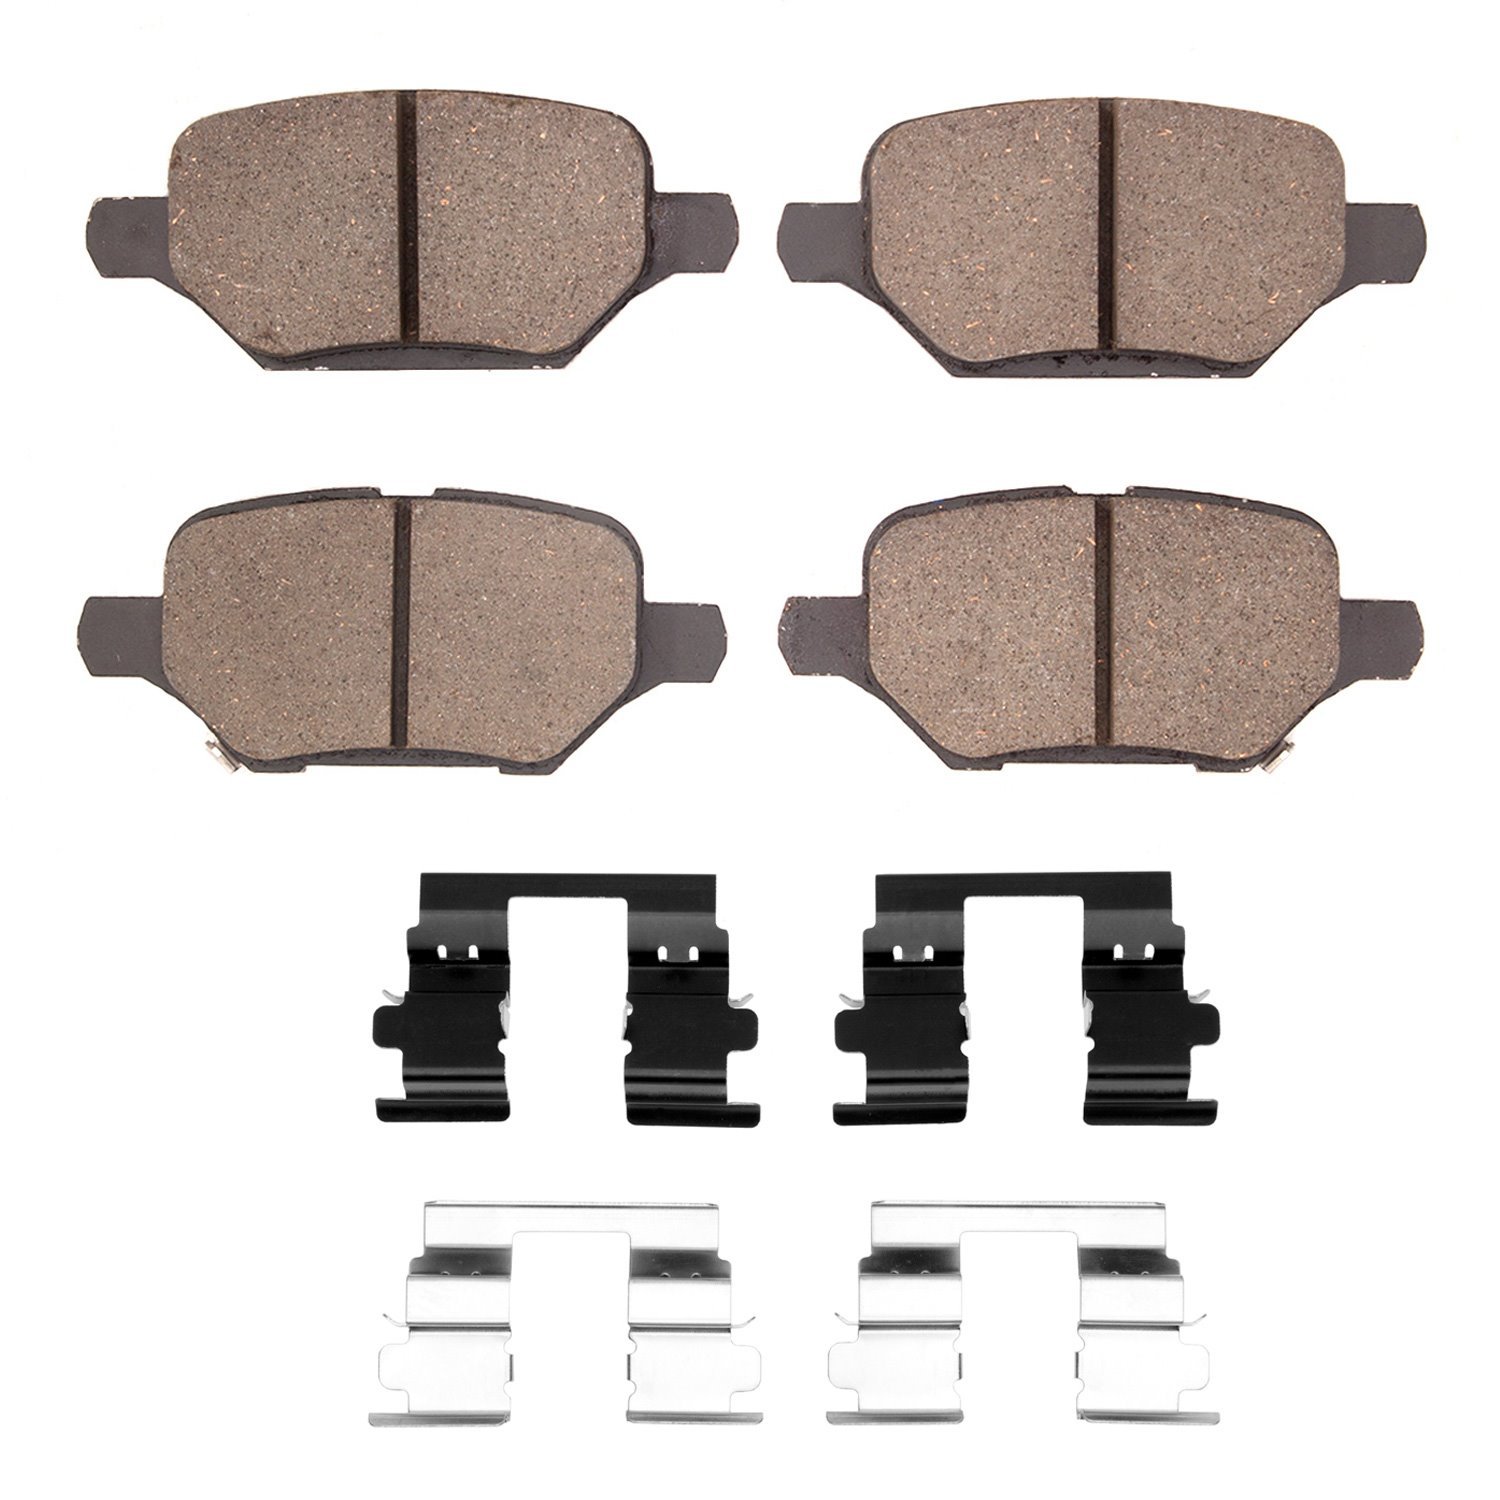 1551-2168-01 5000 Advanced Ceramic Brake Pads & Hardware Kit, Fits Select GM, Position: Rear